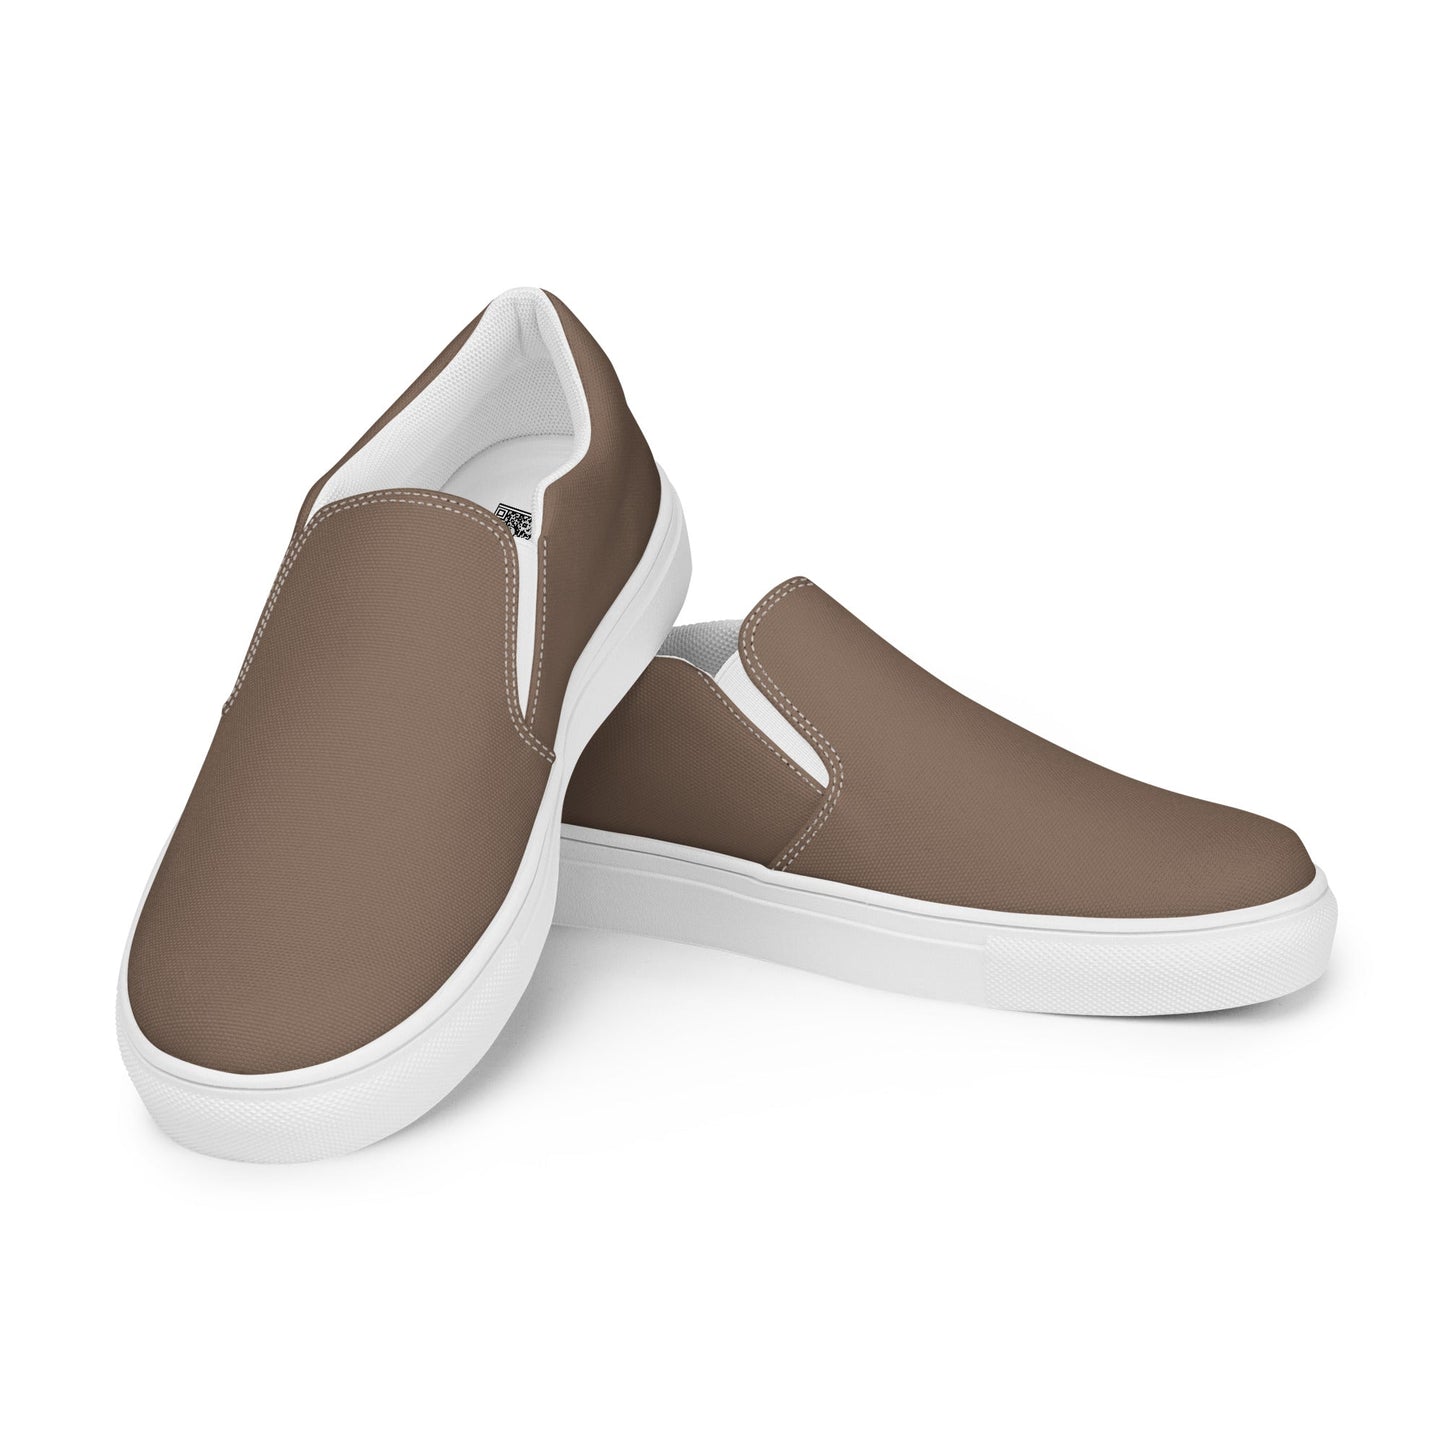 klasneakers Men’s slip-on canvas shoes - Latte Tan